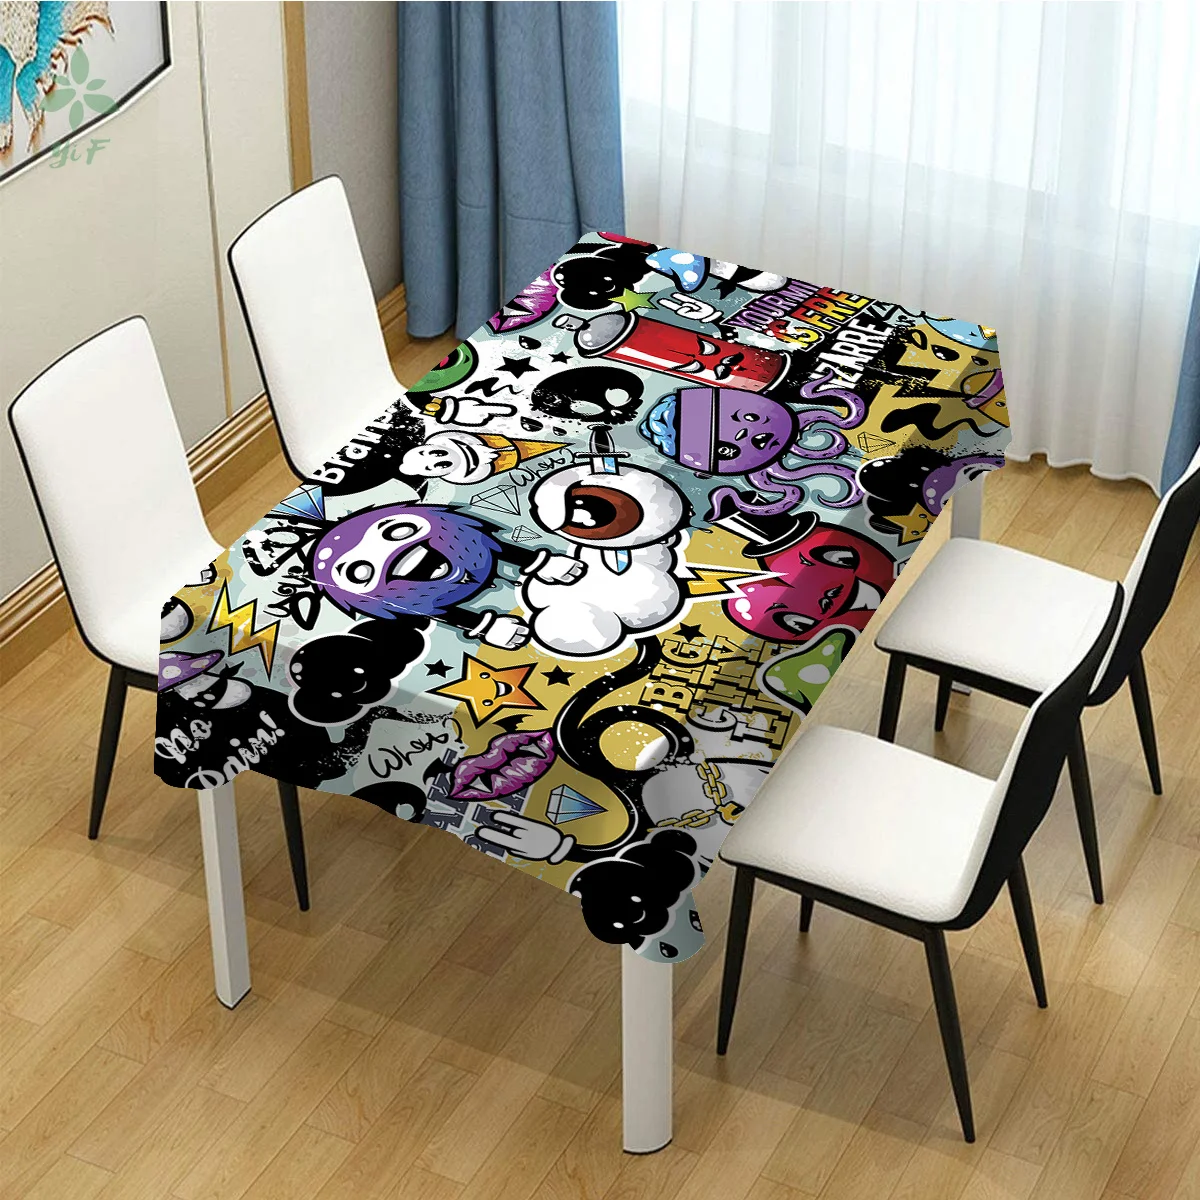 

Monster Scrawl Design Tablecloth Unique Indoor Outdoor Dining Decoration